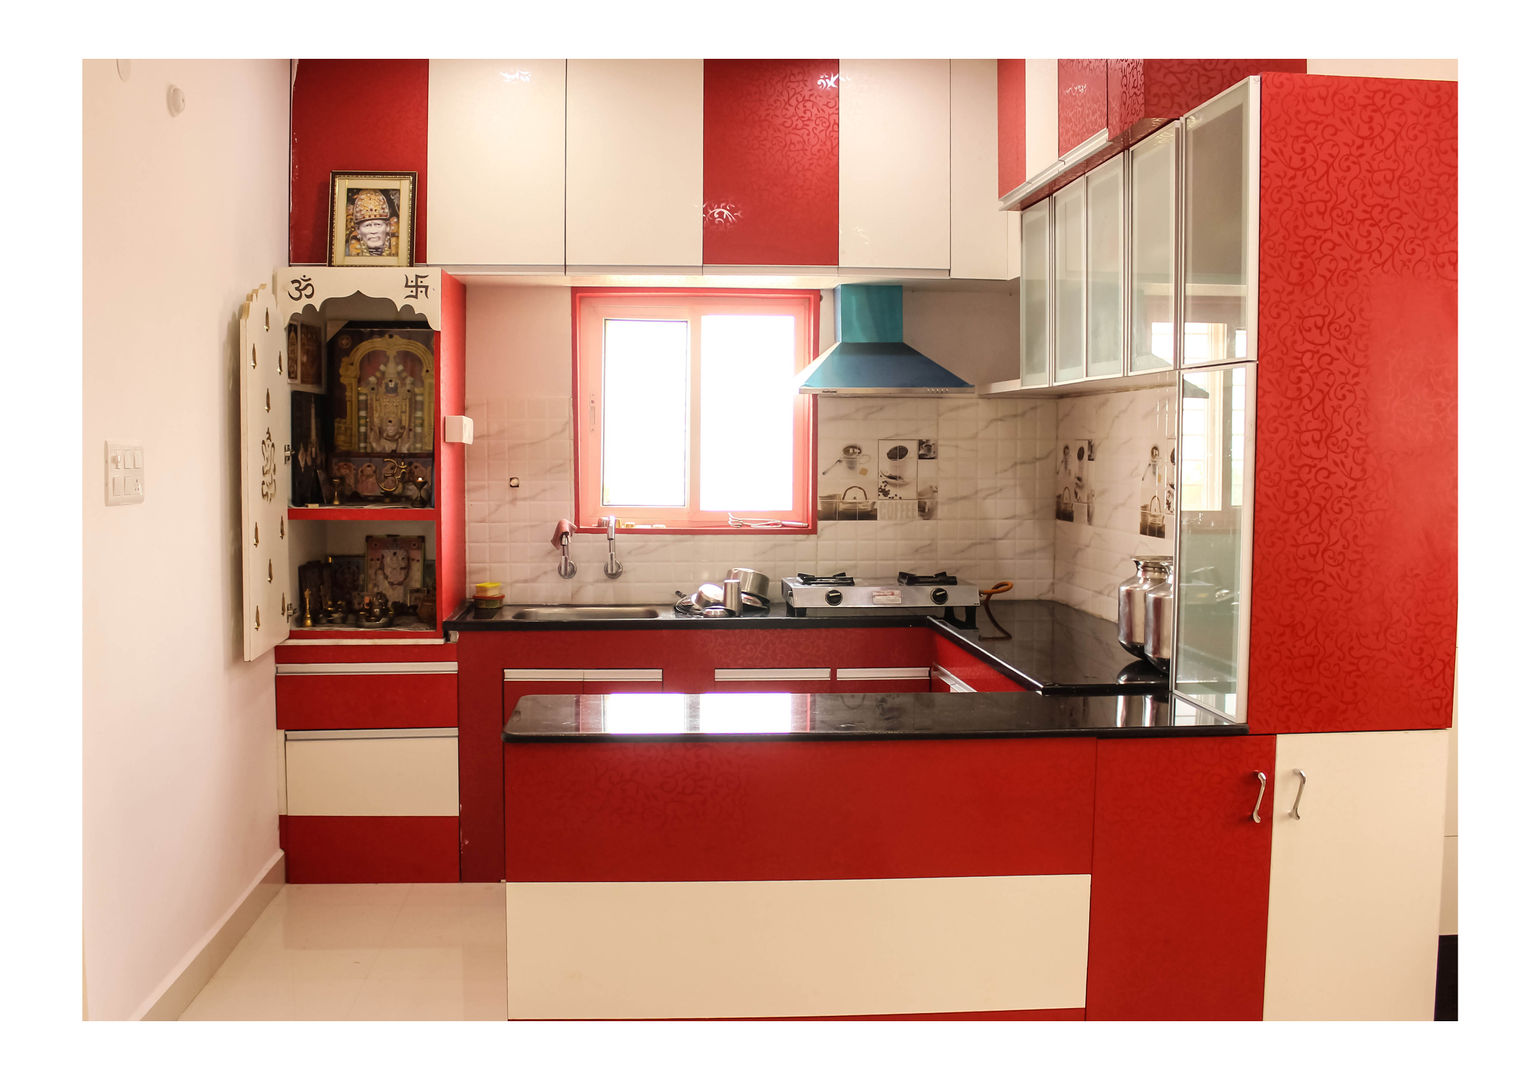 2 Bedroom Flat at Manikonda, Happy Homes Designers Happy Homes Designers Кухня в стиле модерн Шкафы и полки